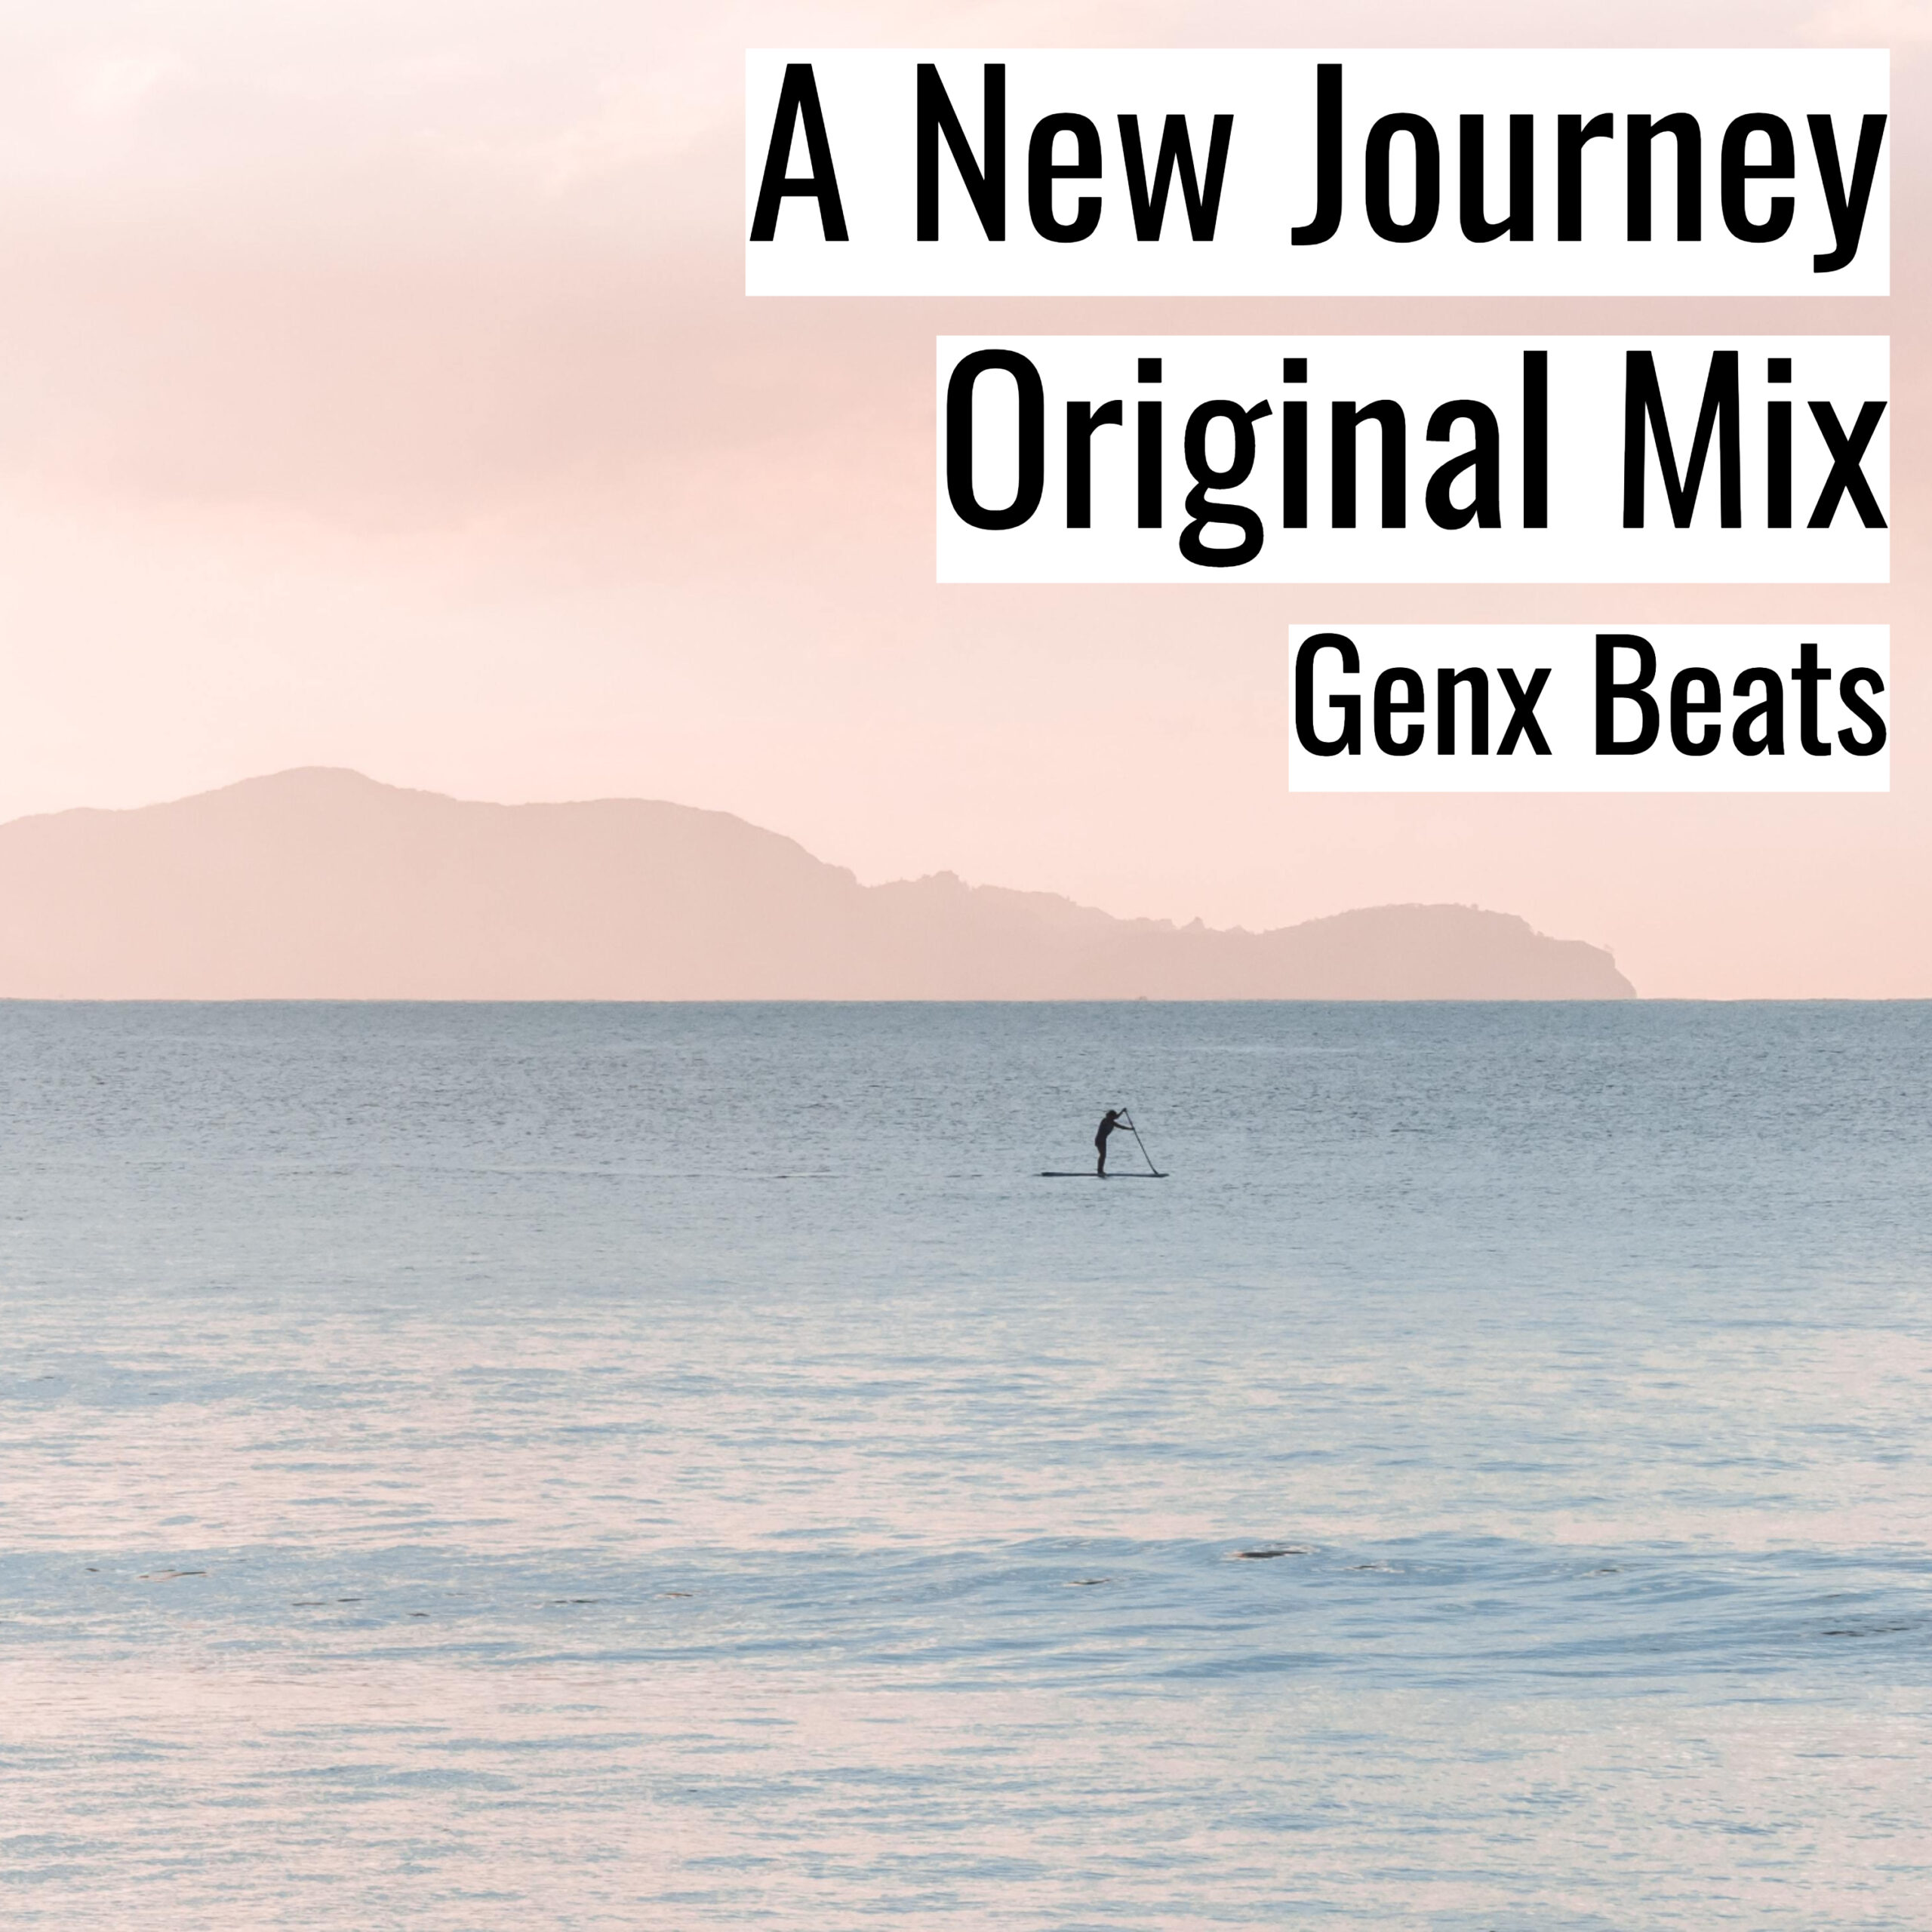 A New Journey Original Mix scaled